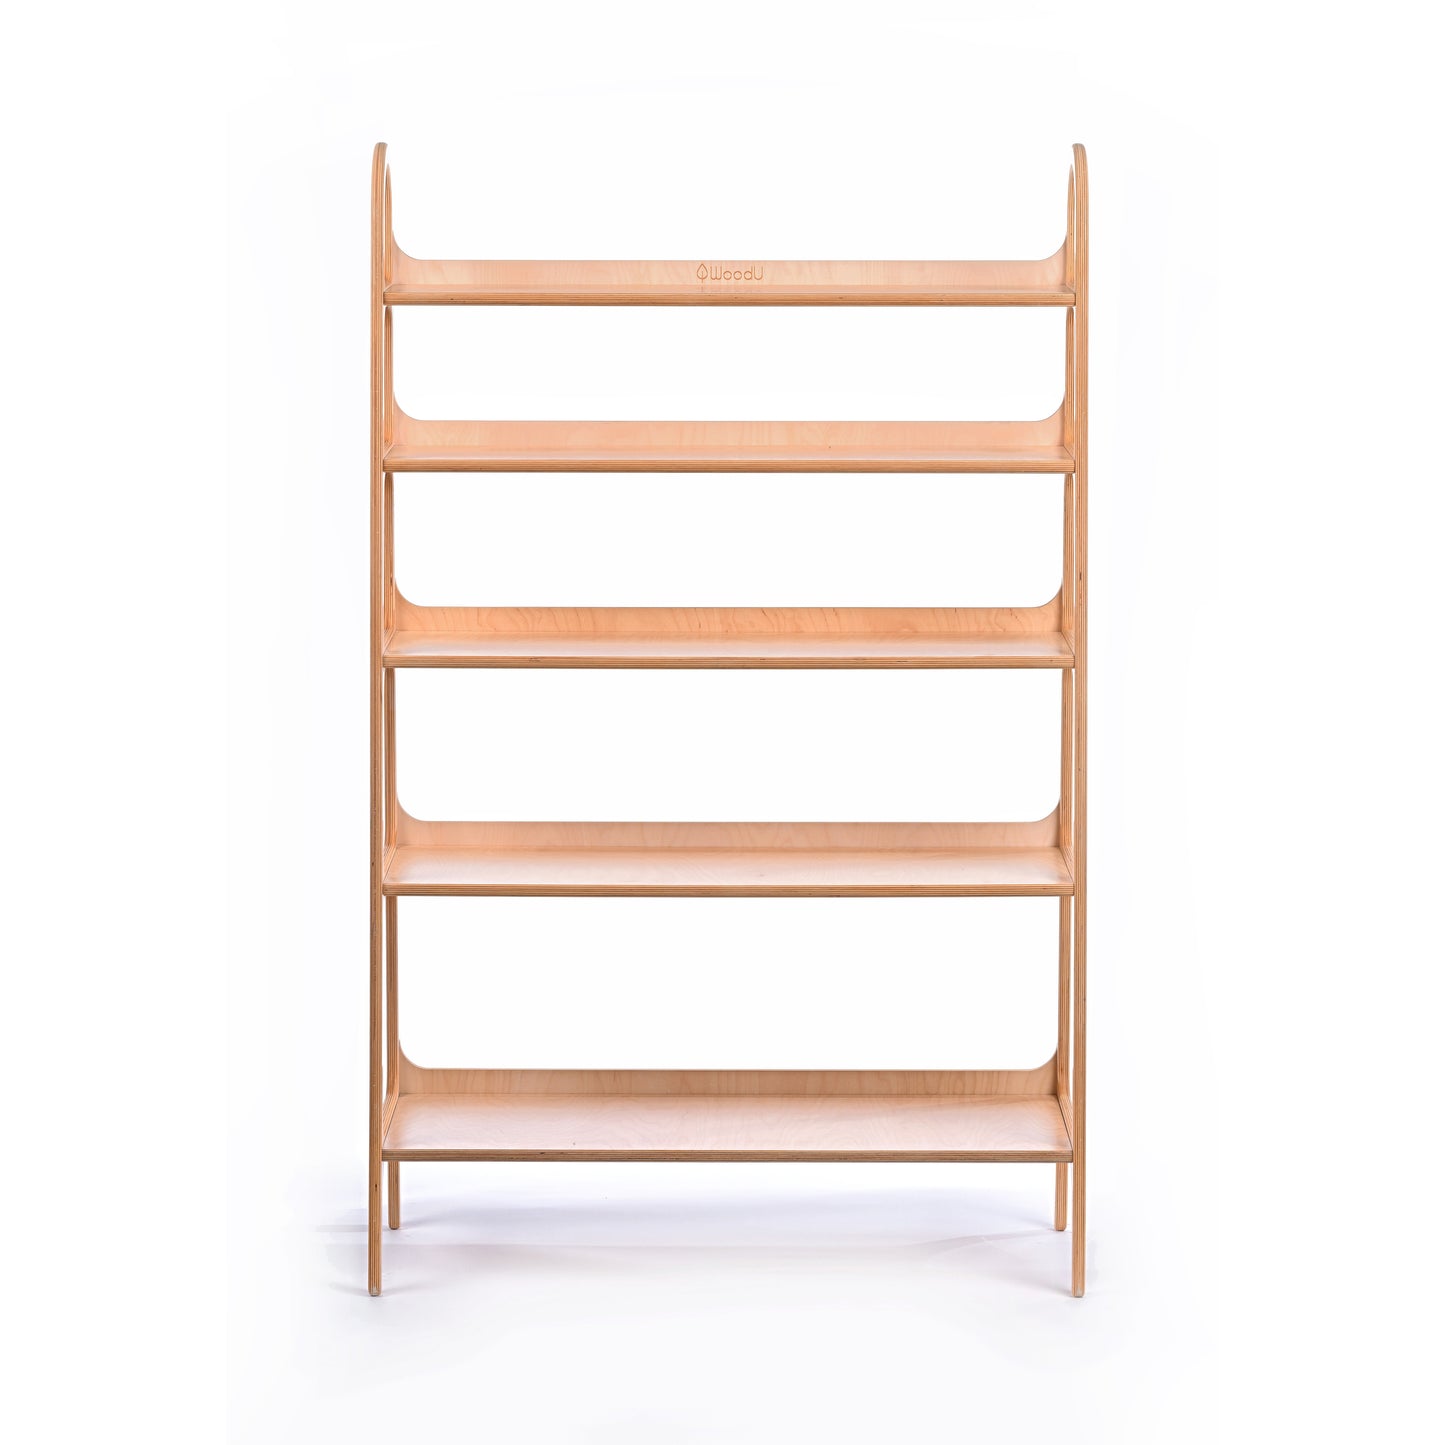 The WoodU Shelf - 5 shelves